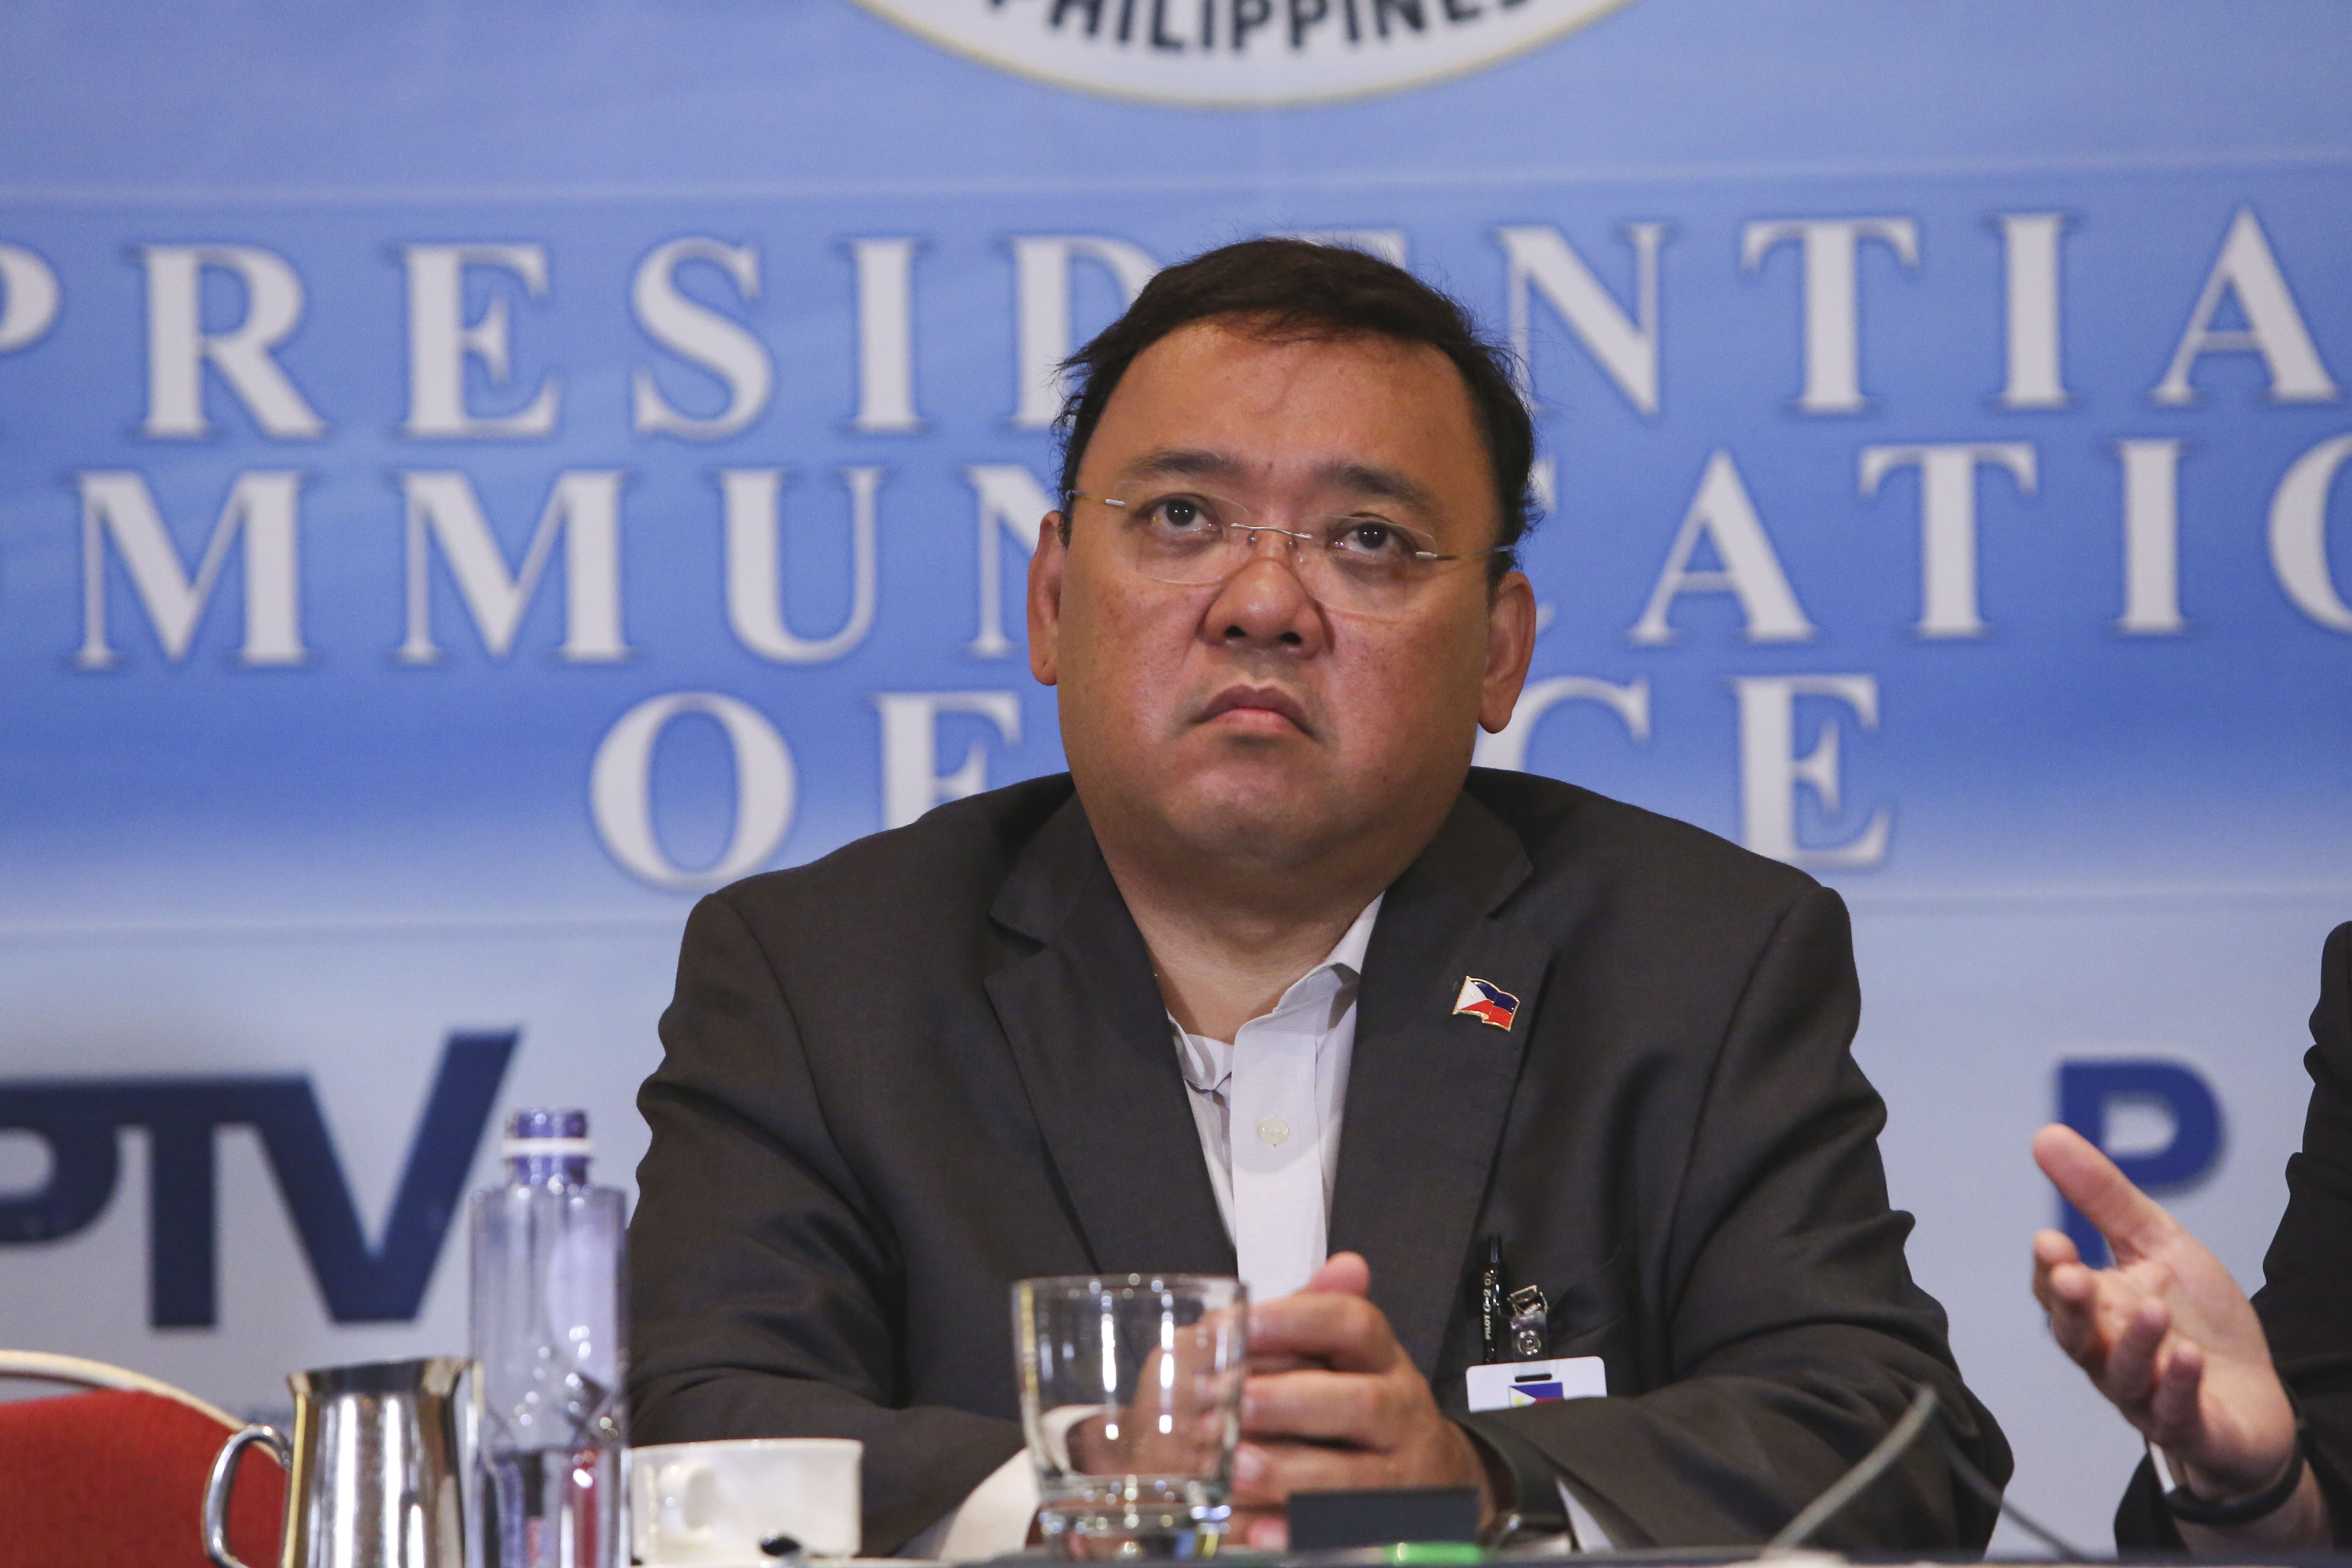 Harry Roque, spokesperson of Philippine President Rodrigo Duterte. Photo: Edmond So